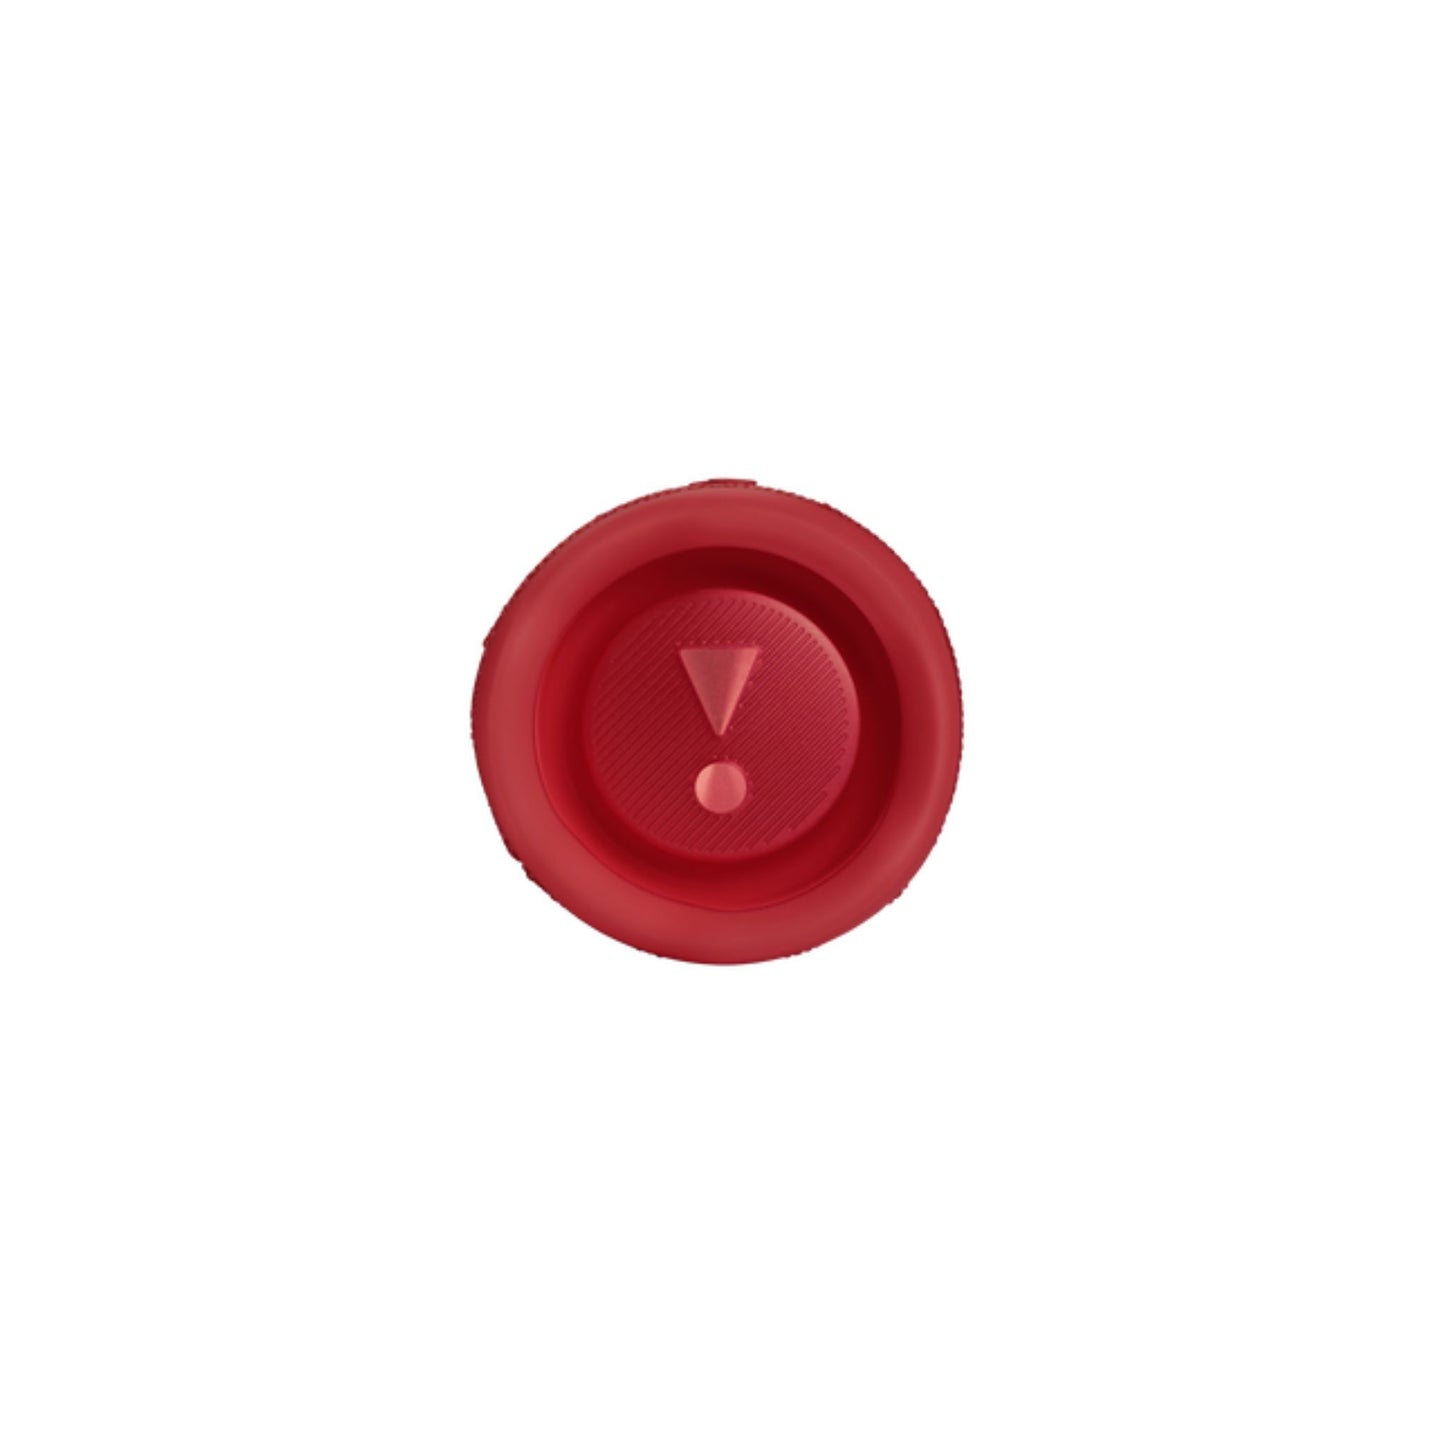 JBL Flip6 Waterproof Portble  Bluetooth Speaker -Red